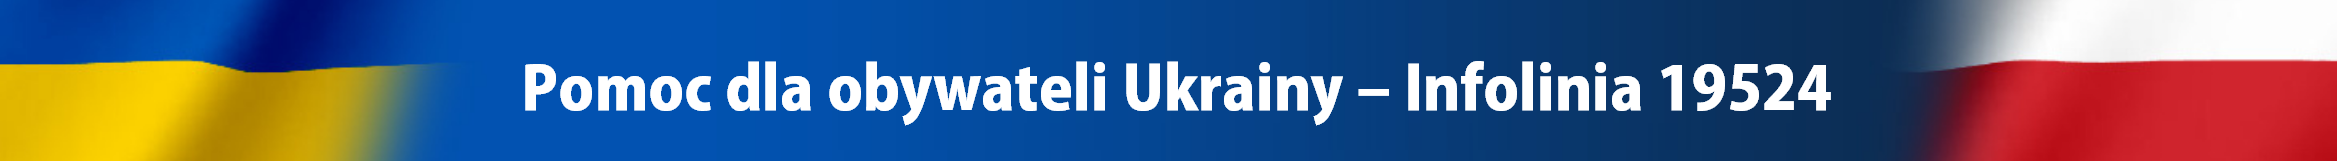 Baner Pomoc dla obywateli Ukrainy: Infolinia 19524